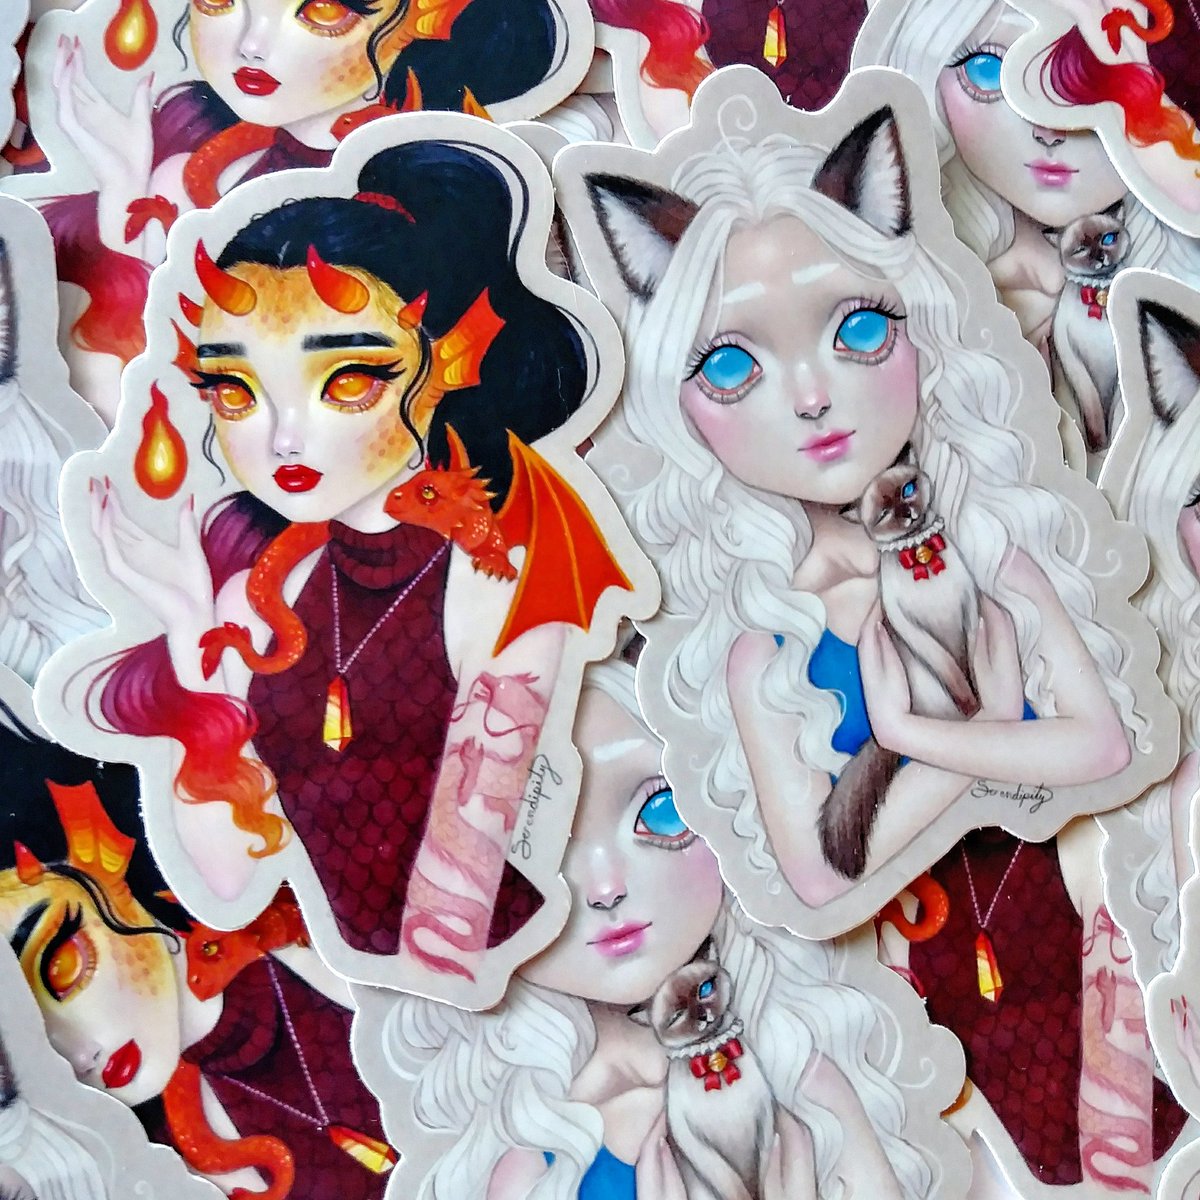 Dragon & Kitty stickers are now in my shop! 🐱🔥 
@: etsy.com/shop/serendipi… 
.
.
.
#art #stickers #twitterart #drawing #illustration #cuteart #etsy #etsyart #etsyshop #artstickers #fantasyart #cat #love #cute #dragon #kawaii #popsurrealism #serendipitytheartist #serendipity